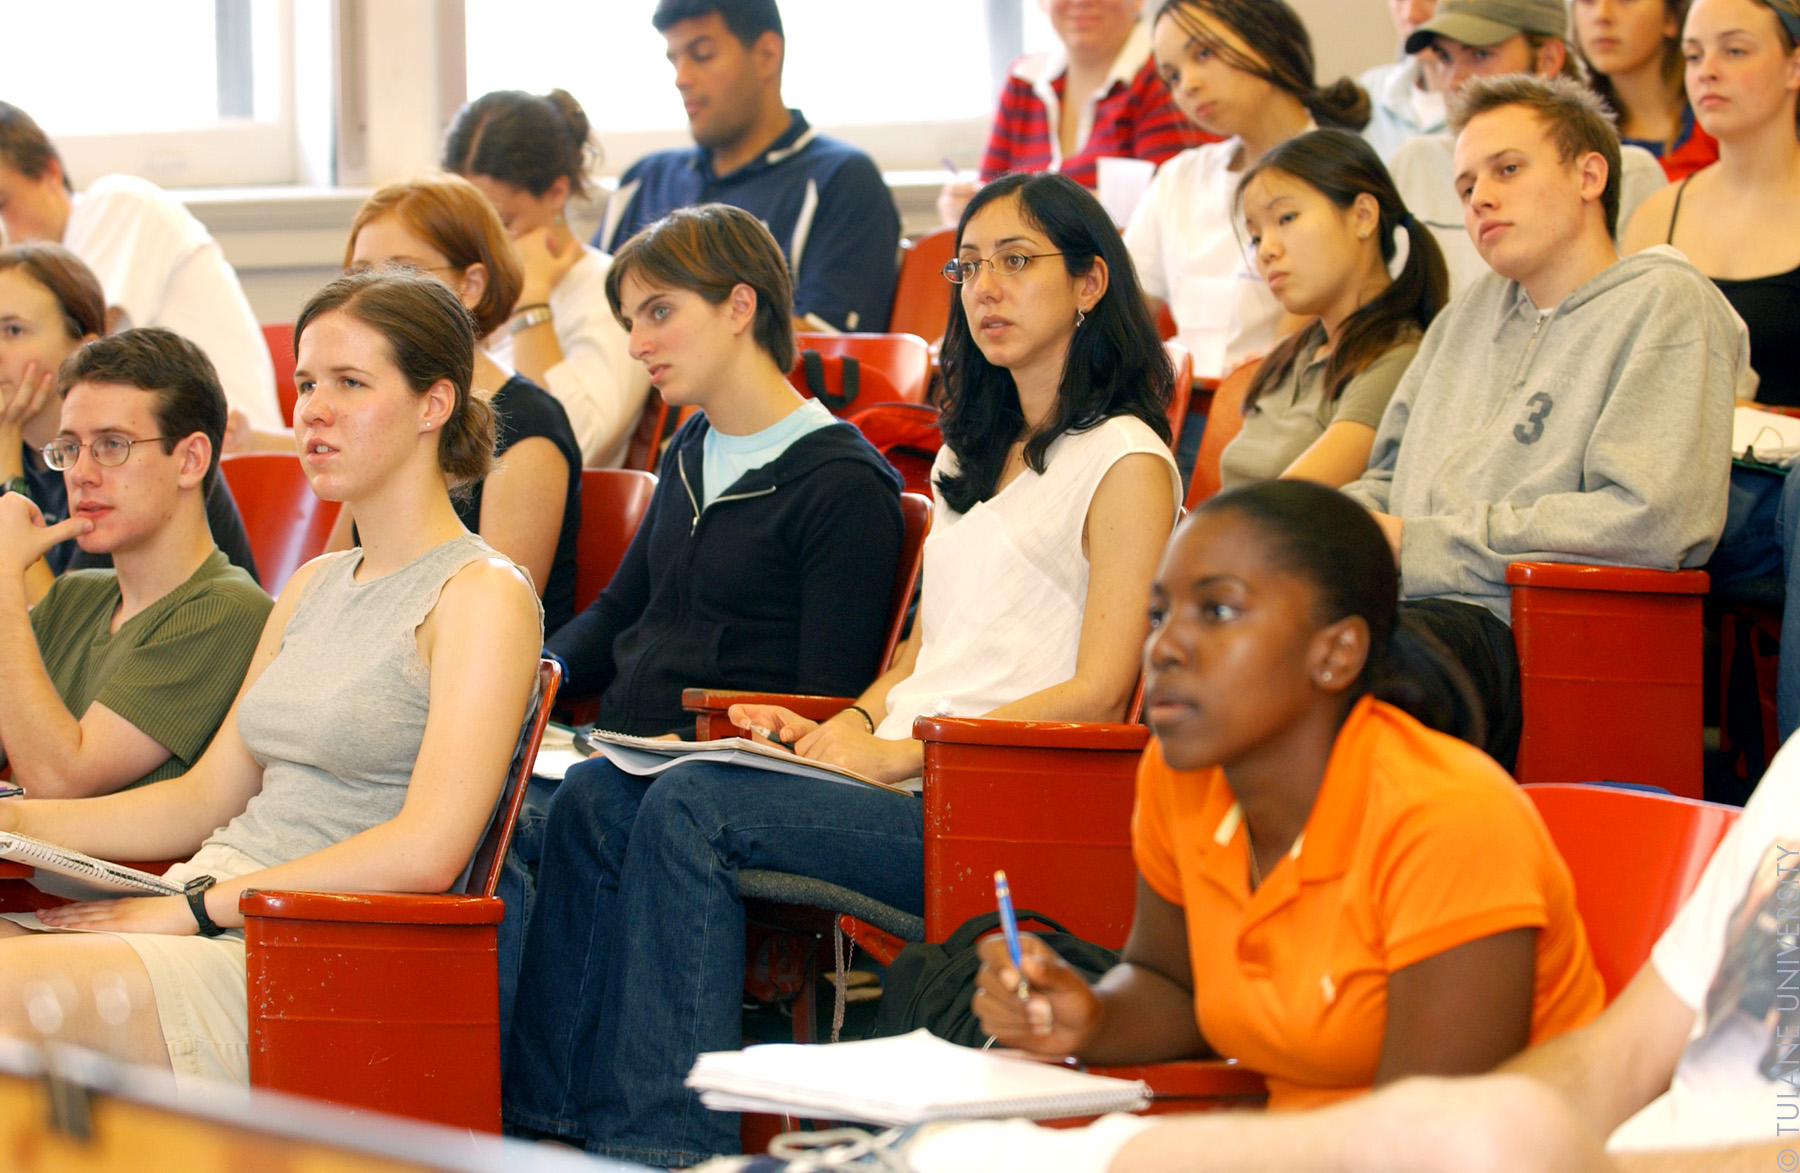 Women ask disproportionately fewer questions than men in seminars 